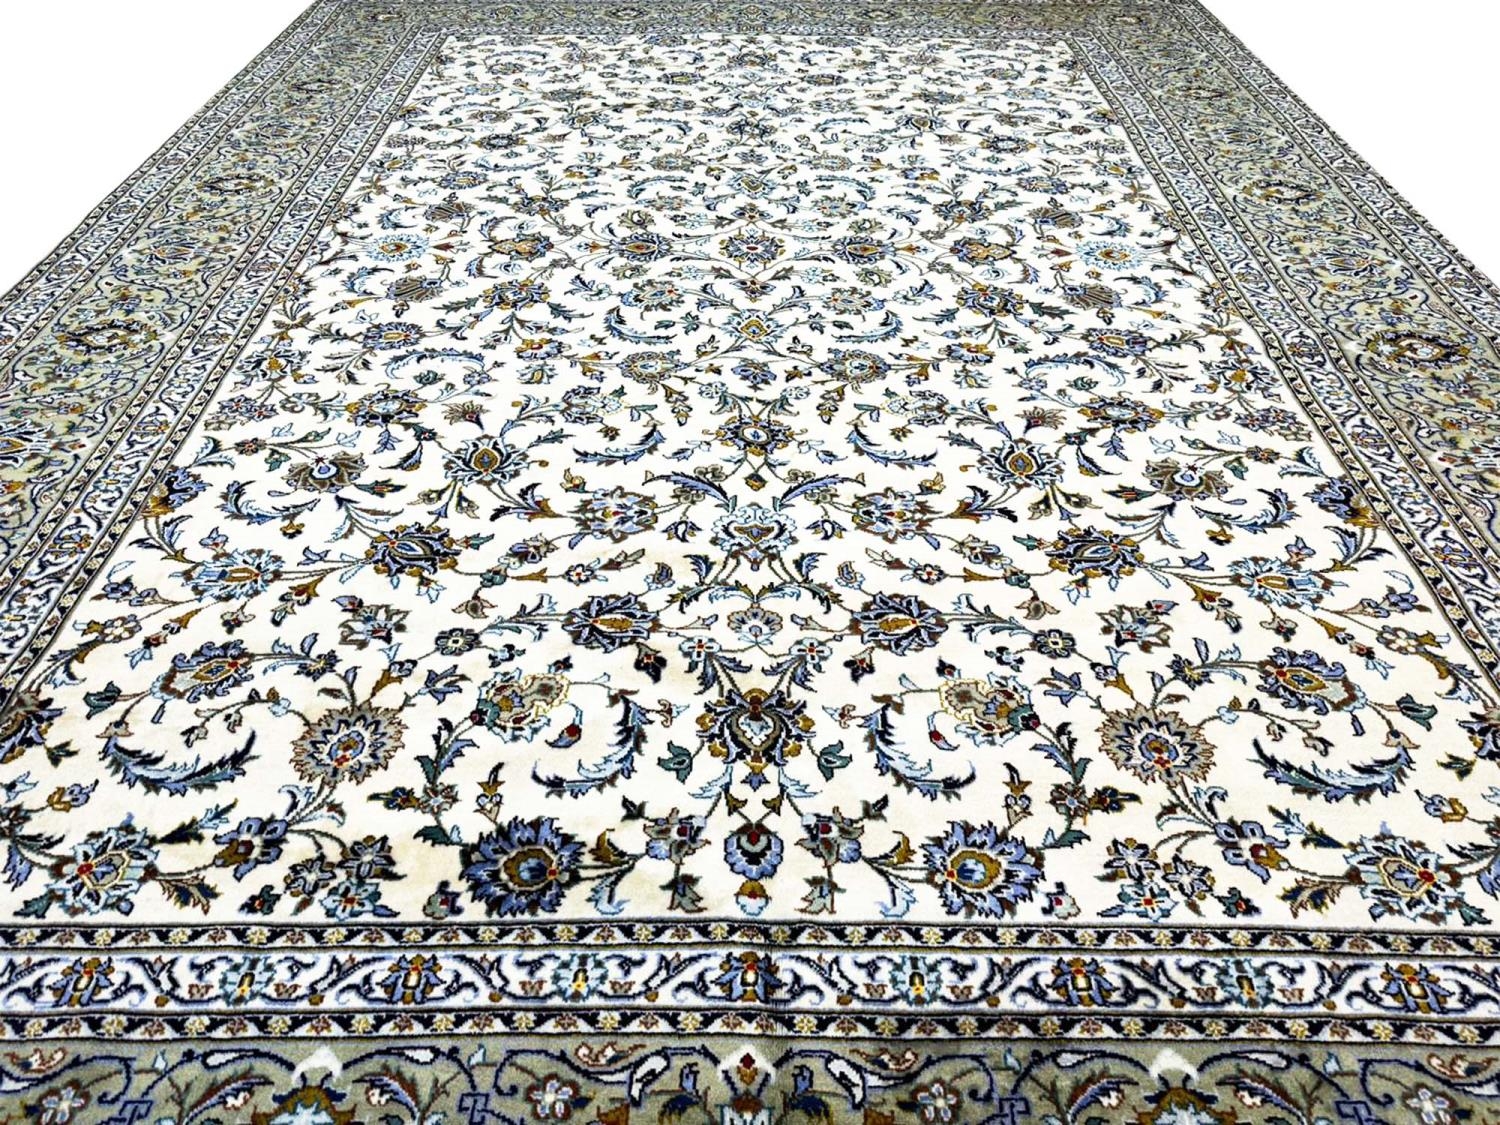 FINE PERSIAN ISFAHAN DESIGN CARPET, 380cm x 290cm. - Image 4 of 5